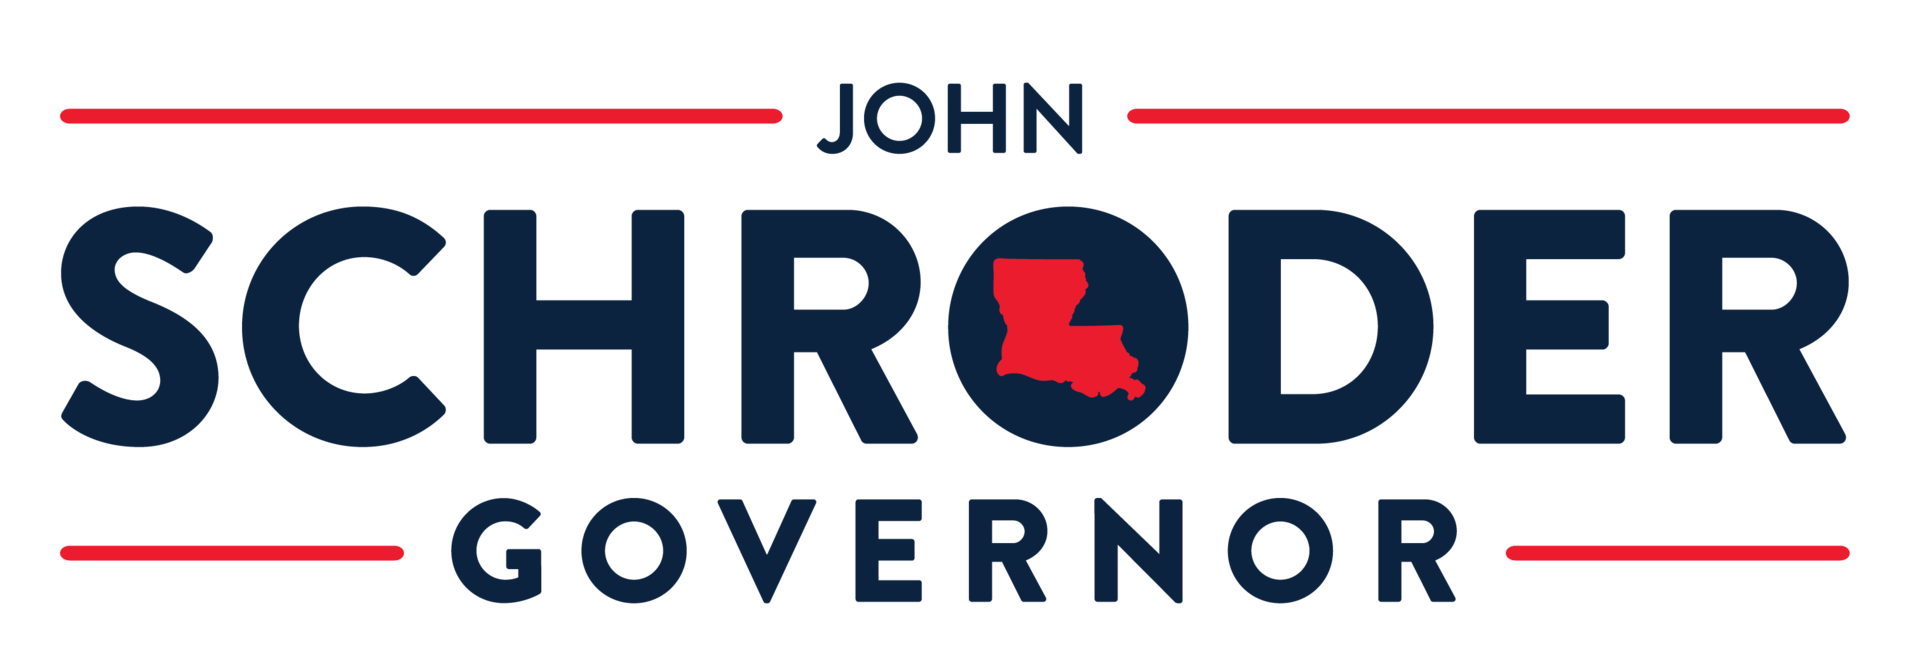 Schroder logo governor final rgblowres